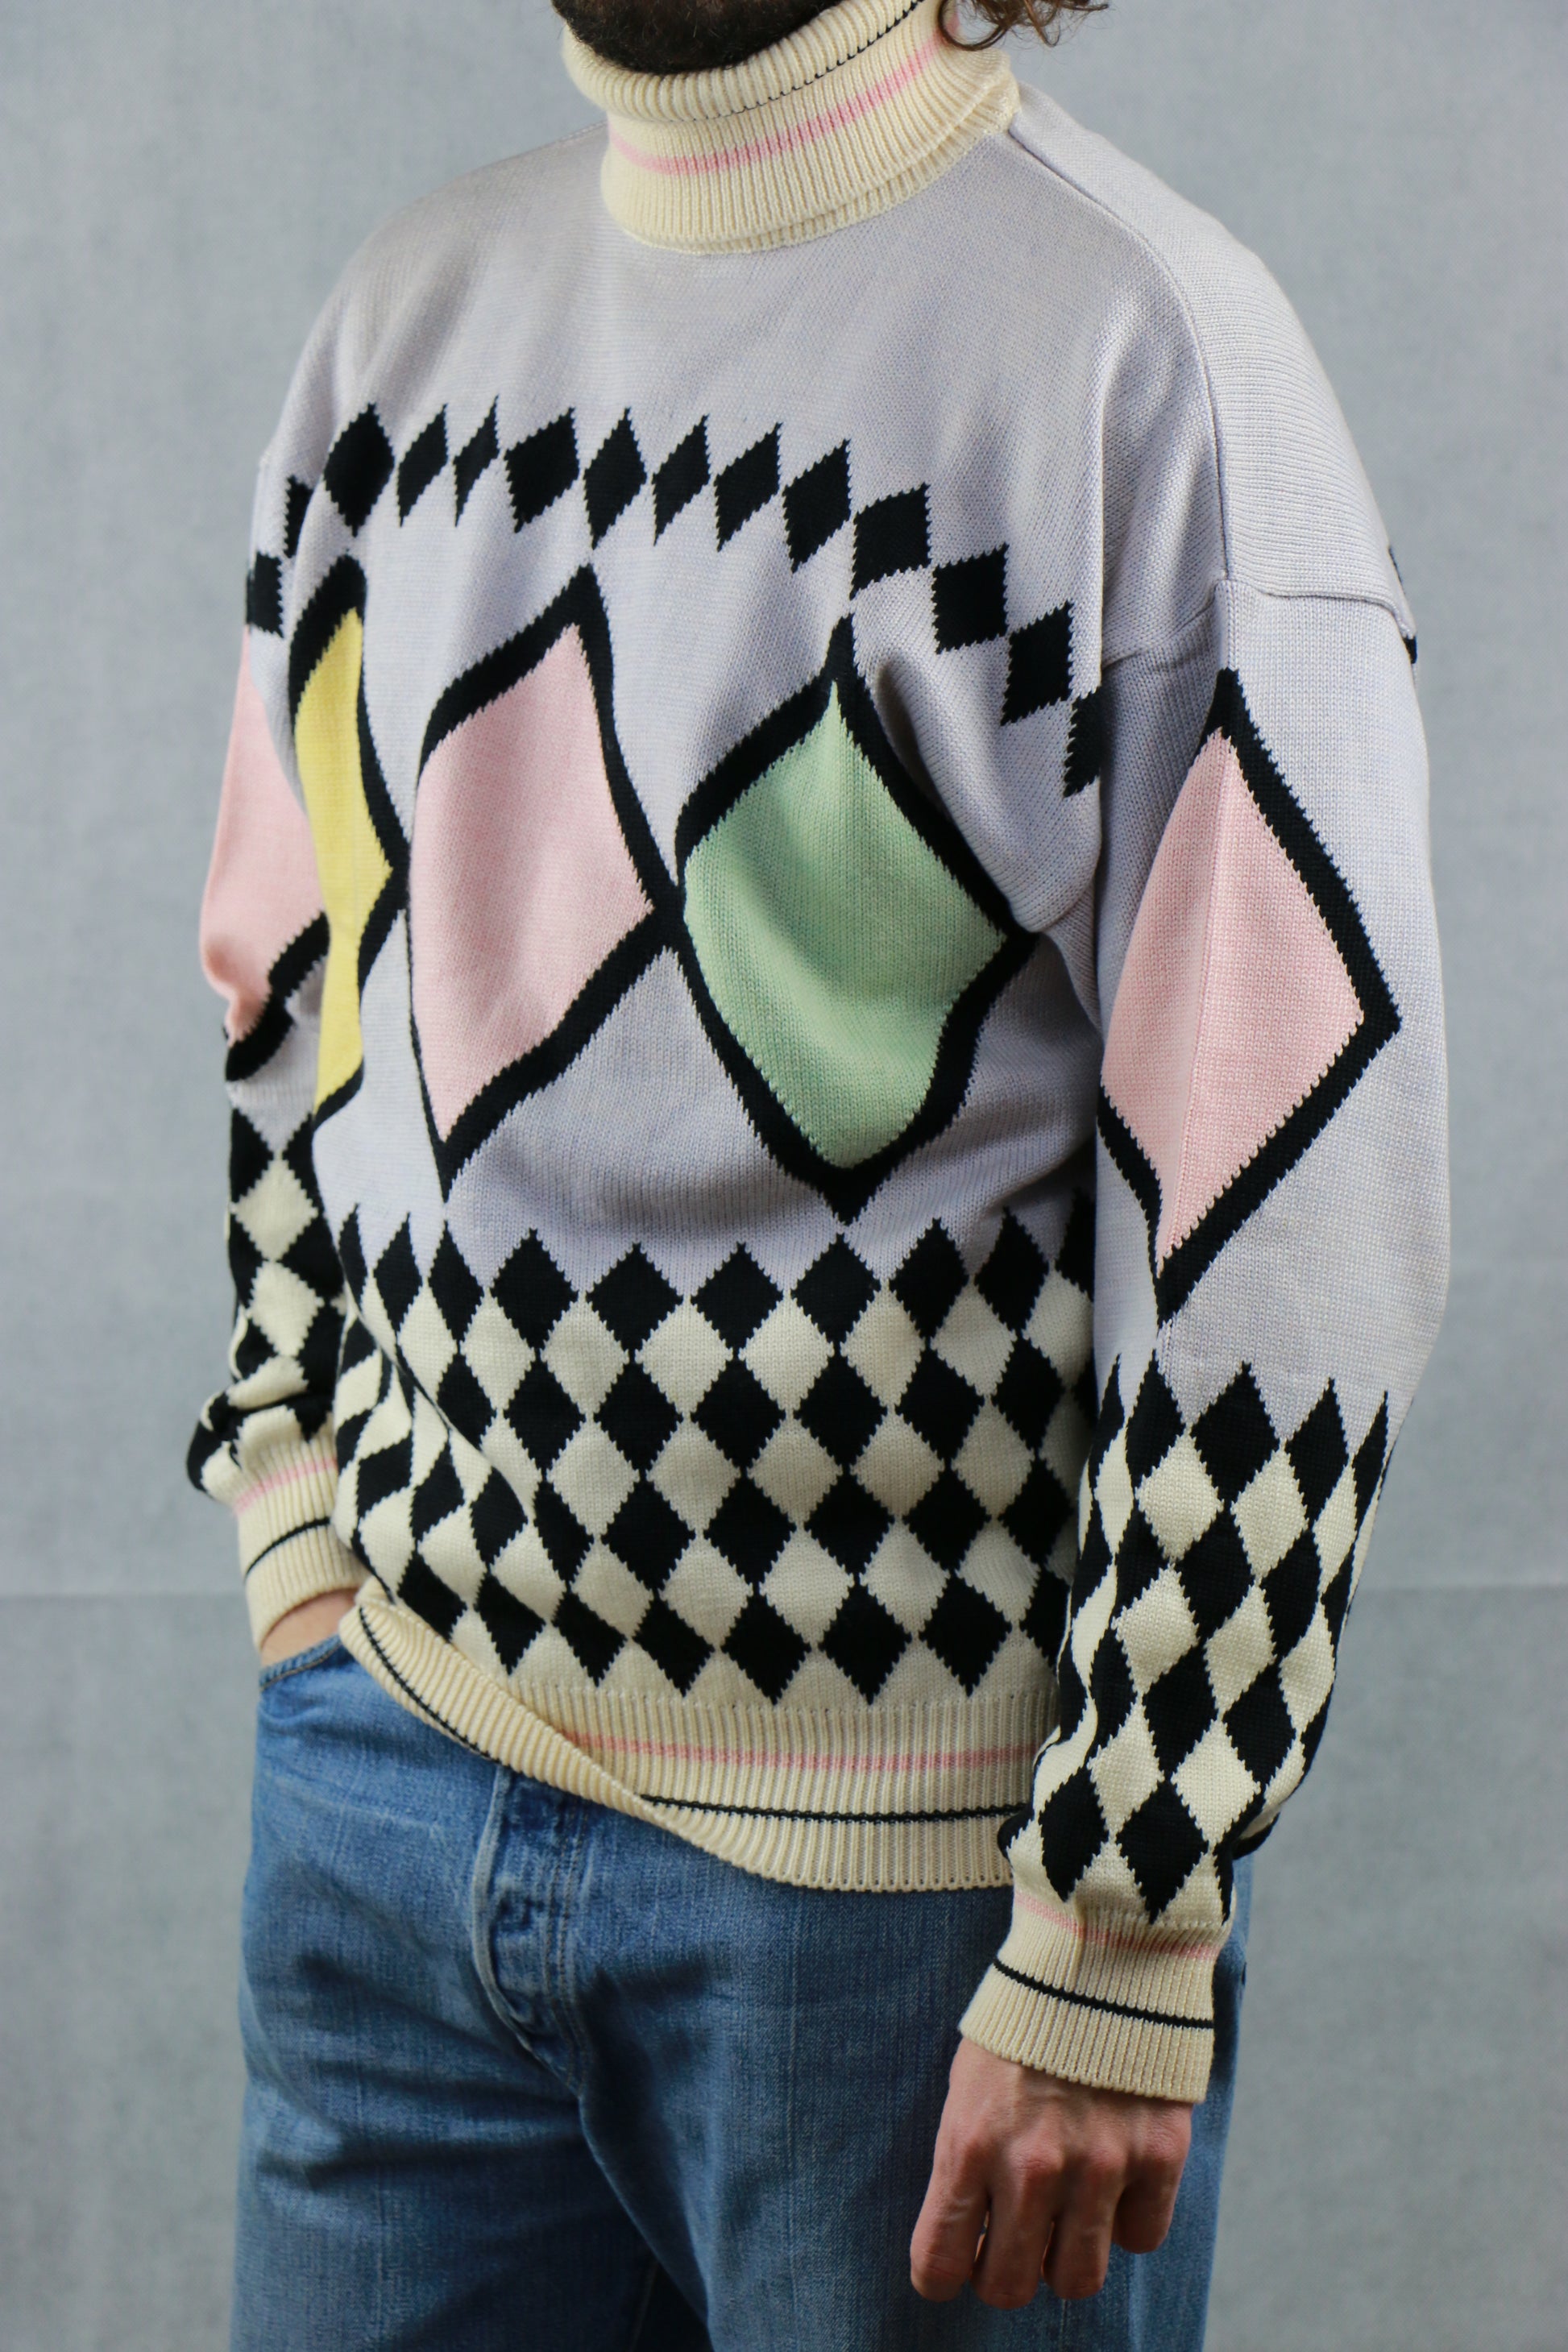 Gianni Versace Knitwear, vintage store clochard92.com